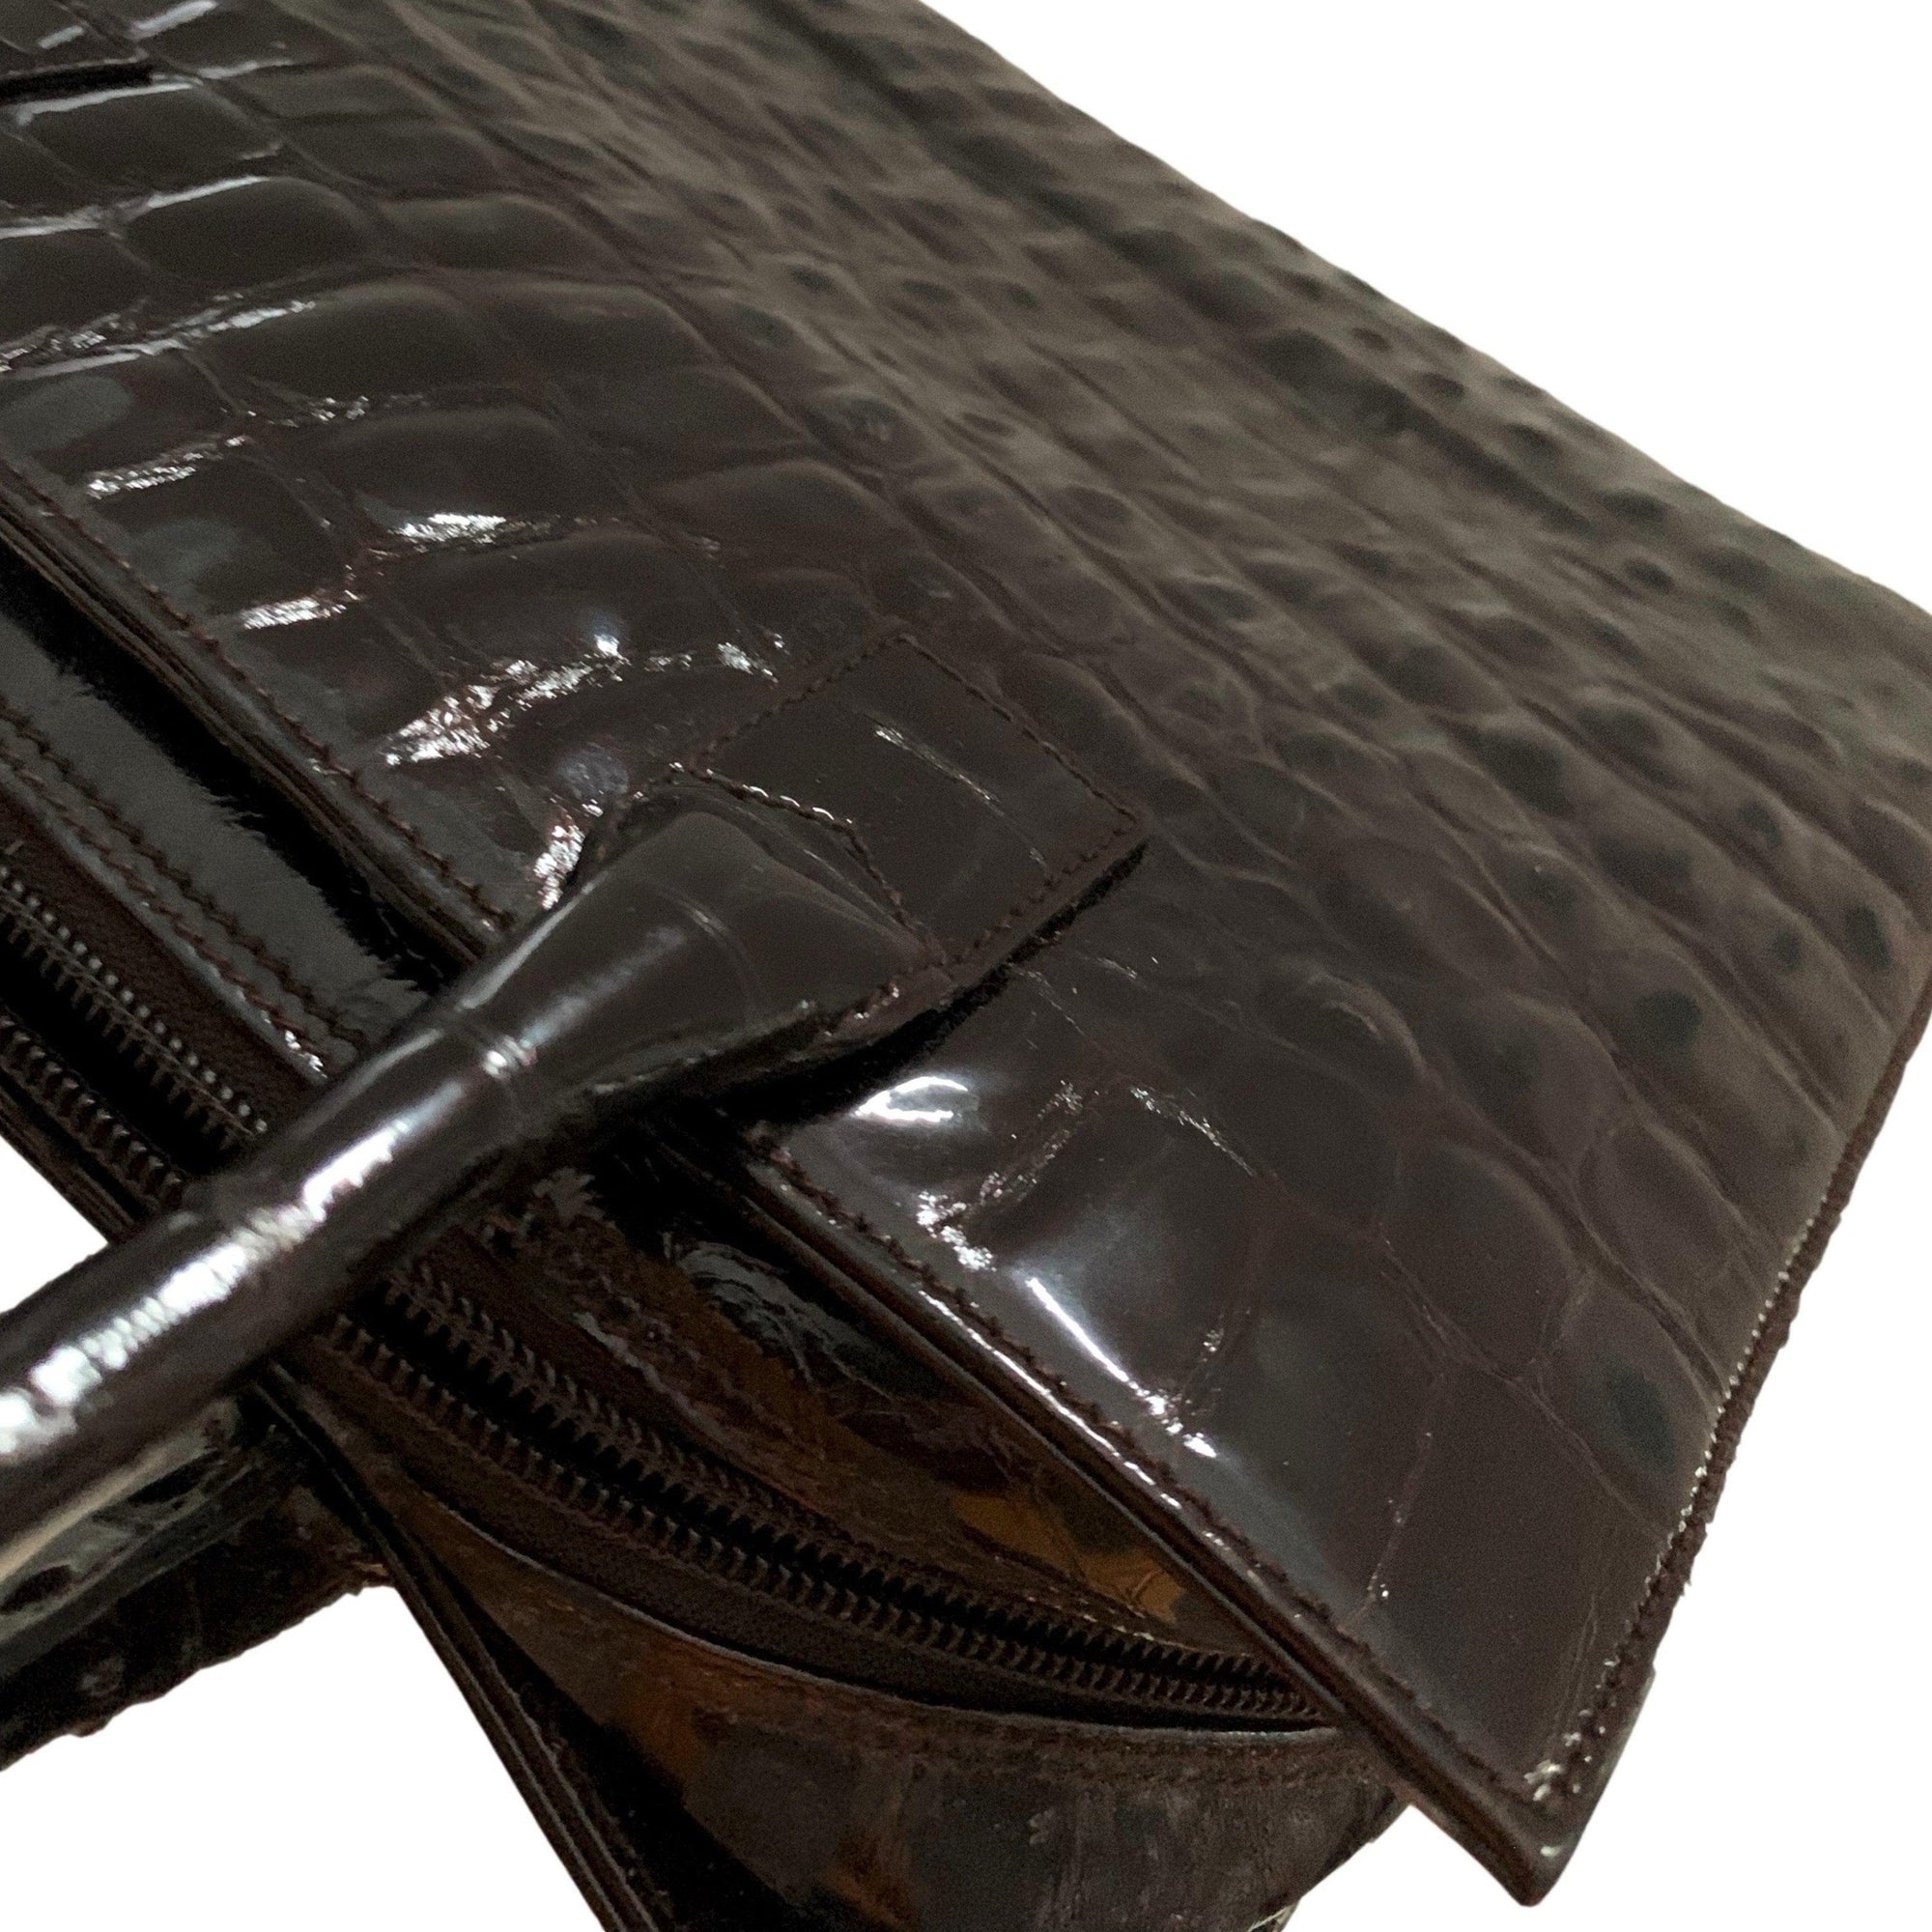 Givenchy Black Croc Embossed Tote - Handbags